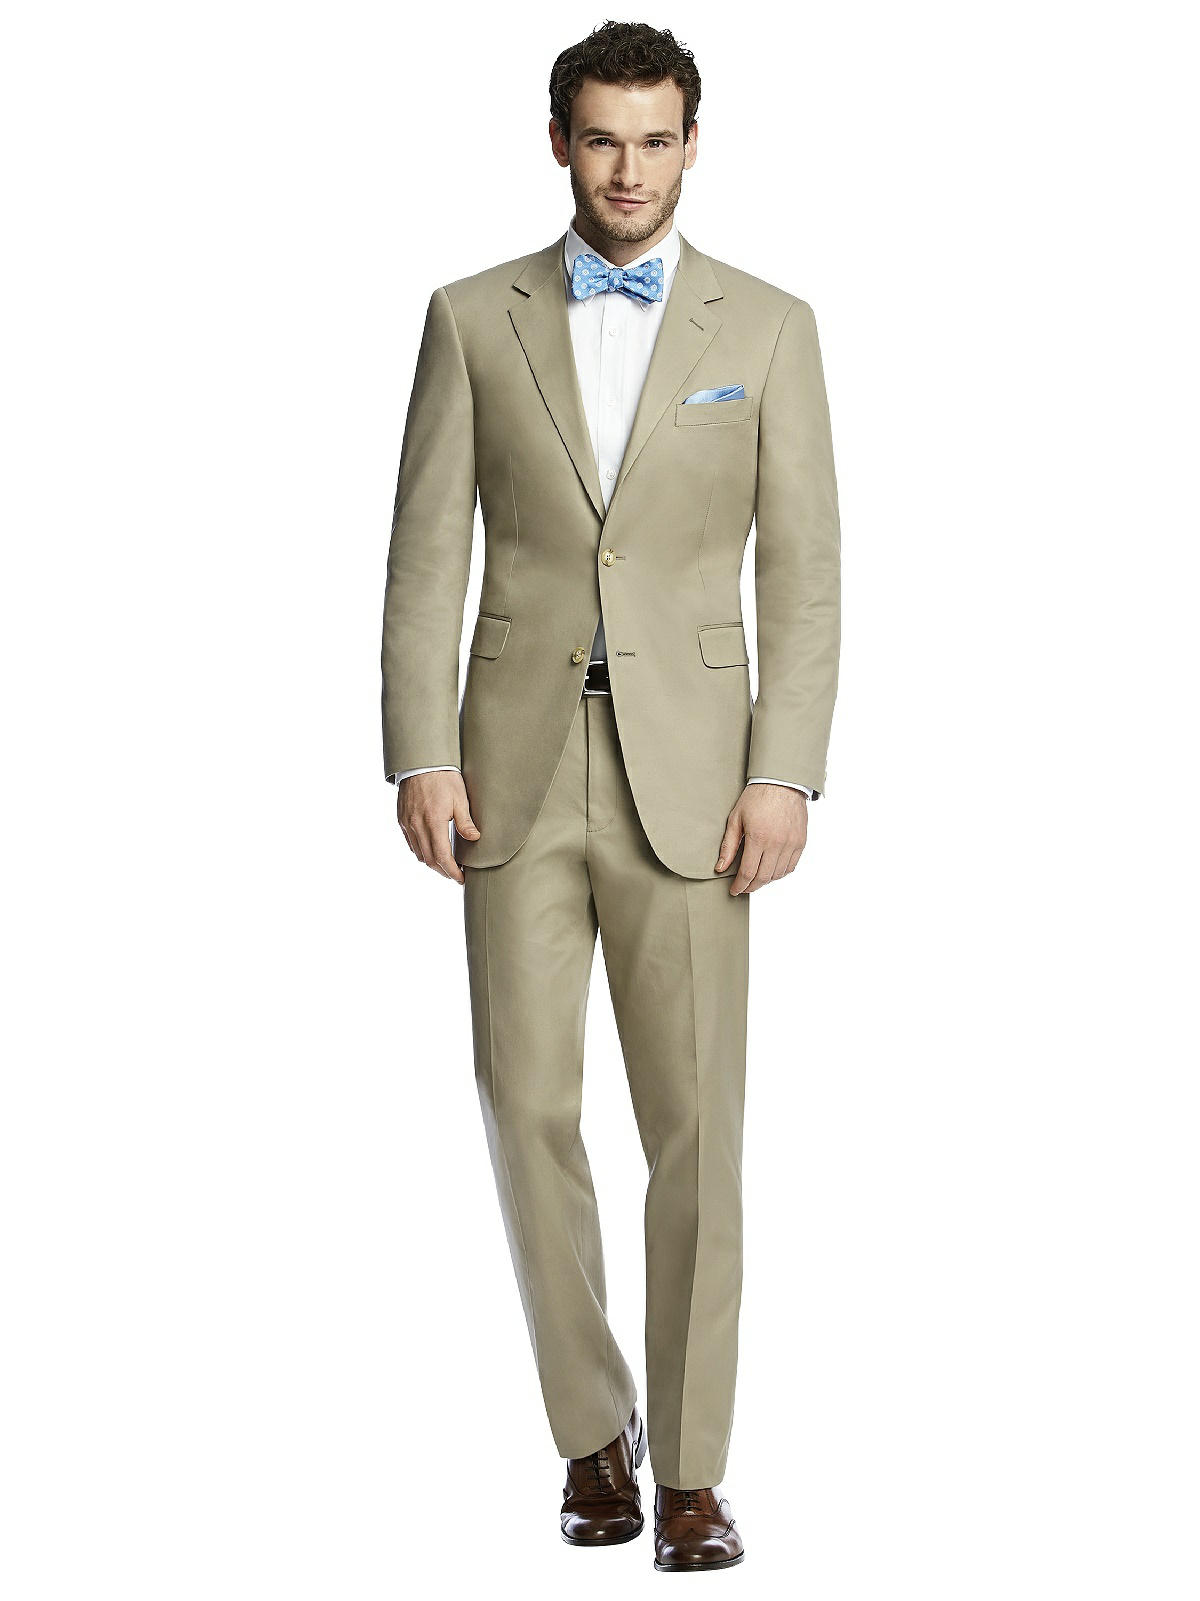 Modern Khaki Suit - The Dessy Group